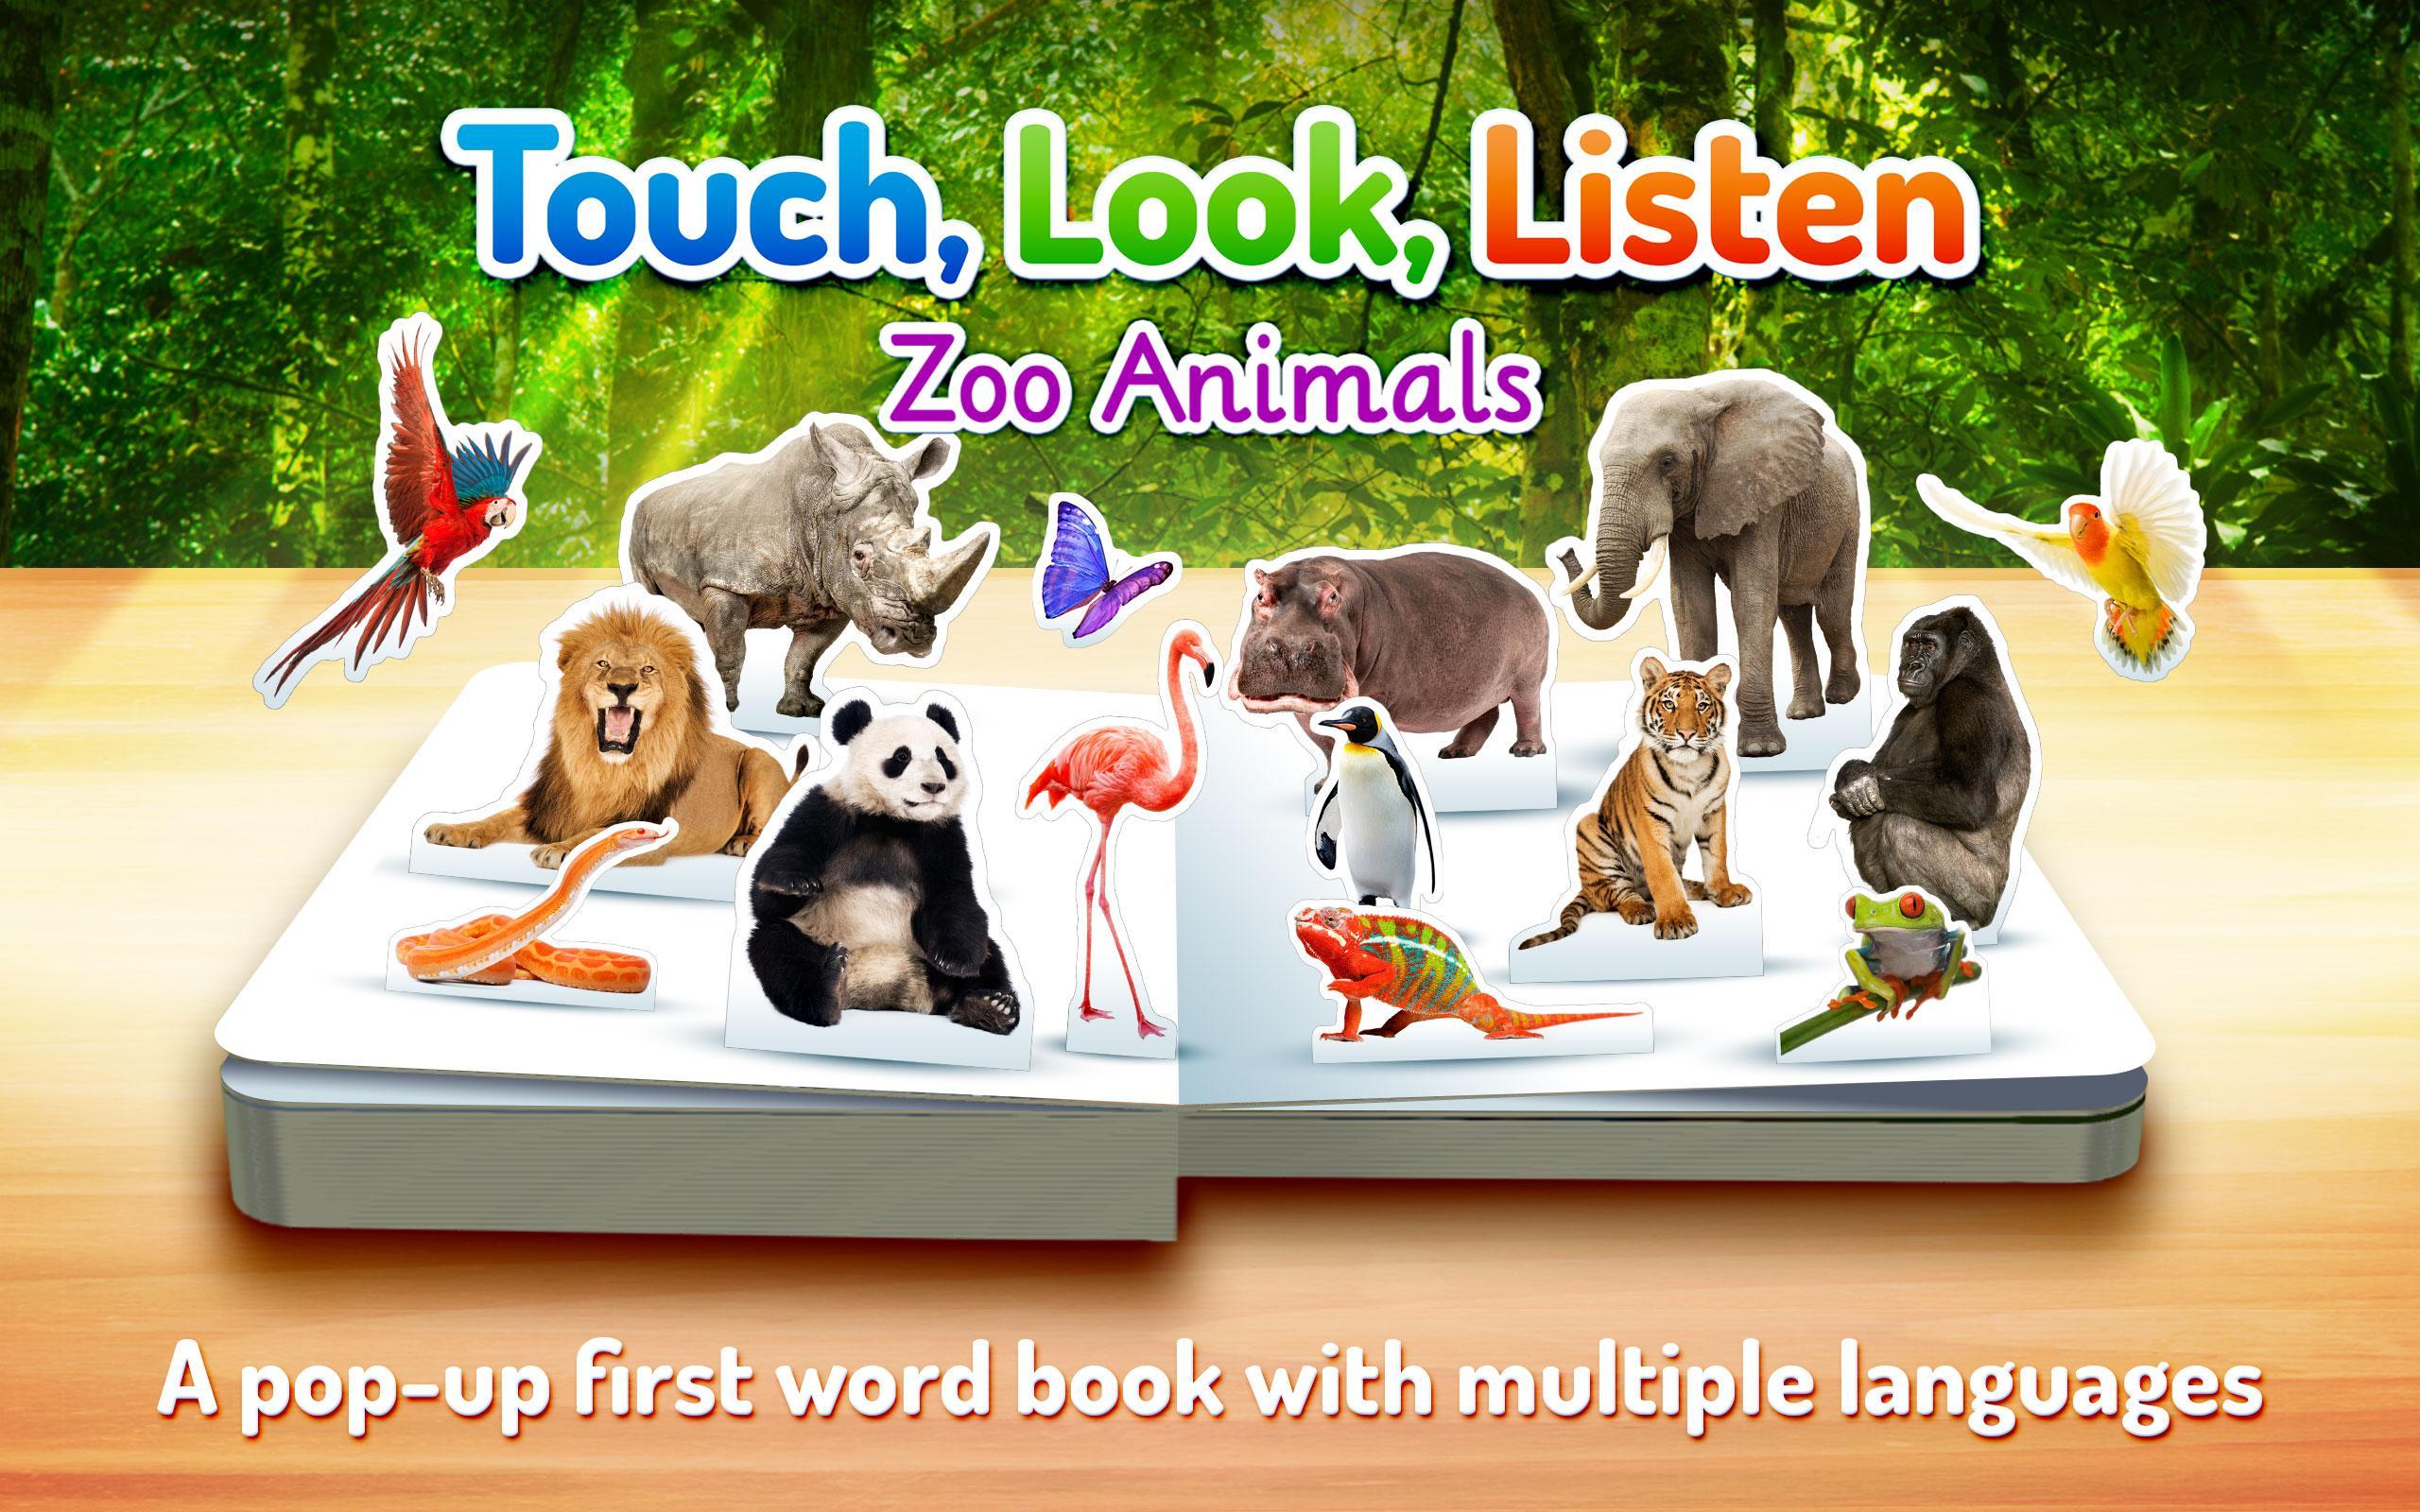 Touch animals. Pop animals игра. Zoo истории. Детское приложение с животными. Touch look listen.